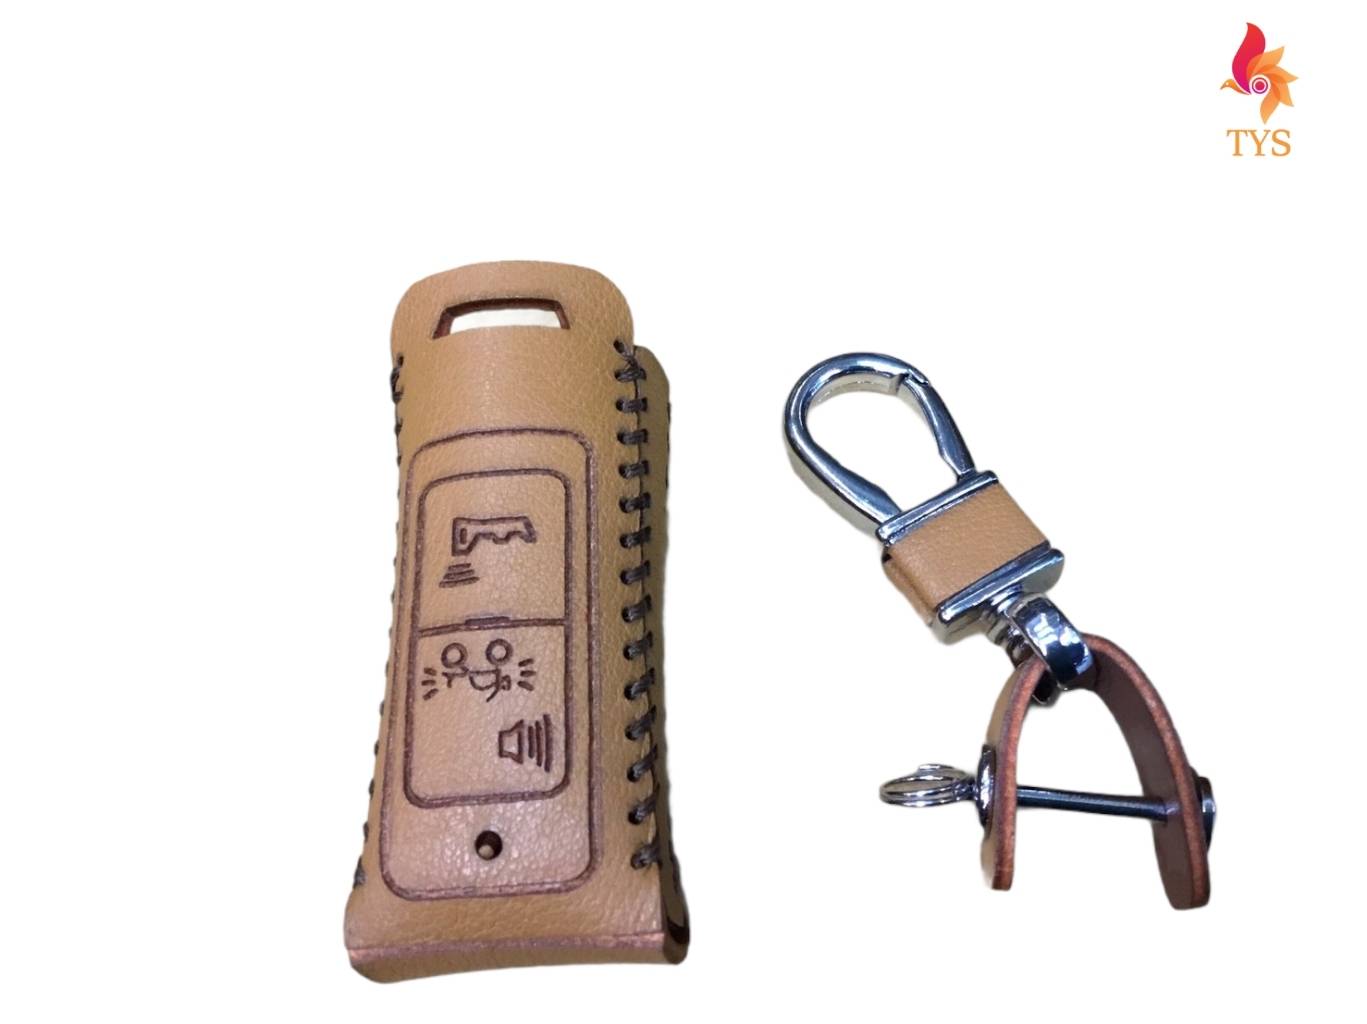 PCX ซองกุญแจ ซองรีโมท Pcx160 pcx2021 ซองหนังแท้แฮนเมด ของไทย100%